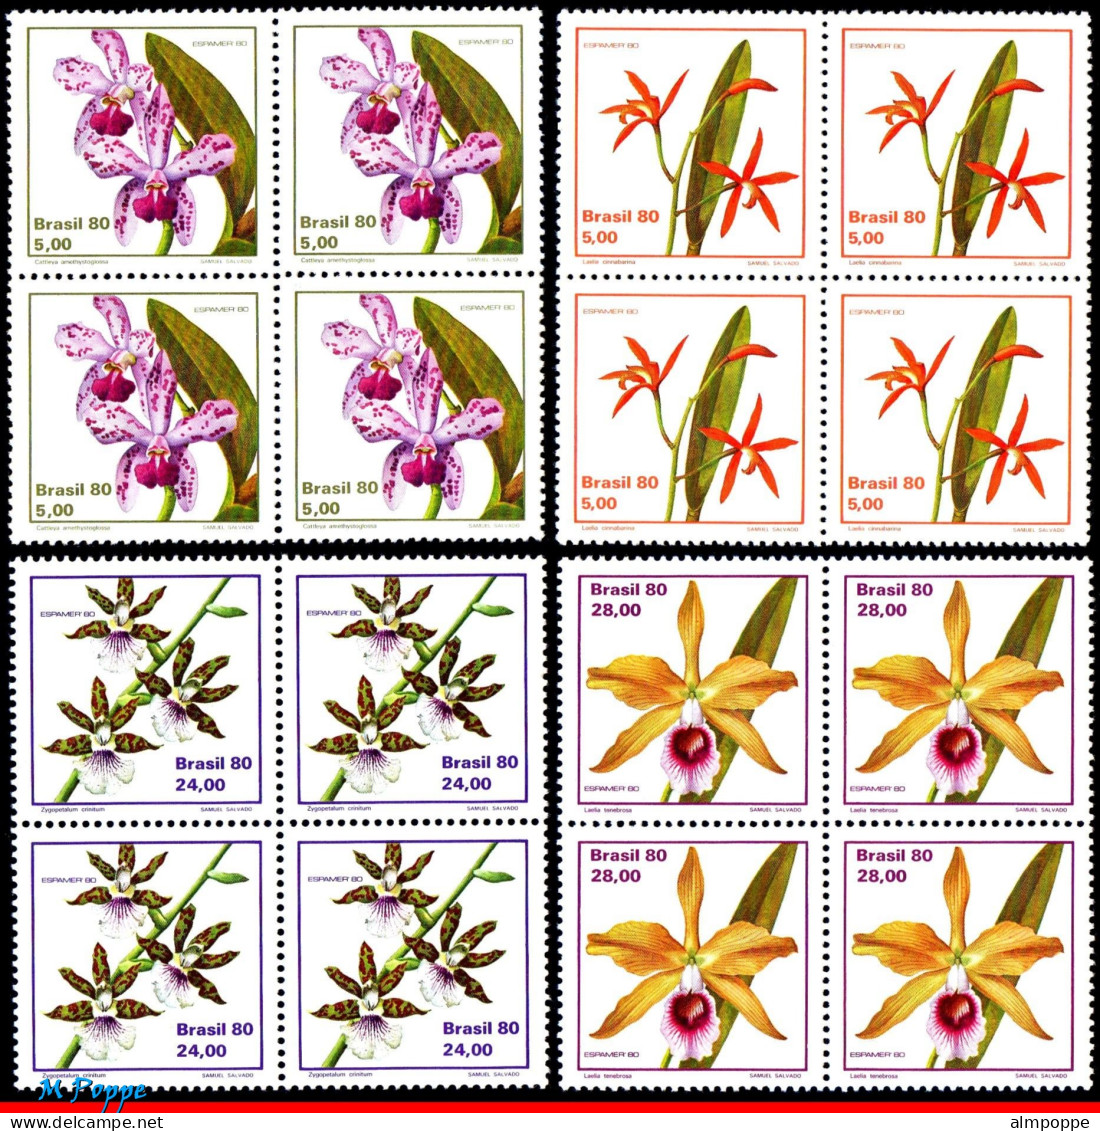 Ref. BR-1711-14Q BRAZIL 1980 - ORCHIDS,PHILATELICEXHIBITION,MI# 1785-88,BLOCKS MNH, FLOWERS, PLANTS 16V Sc# 1711-1714 - Blocks & Sheetlets